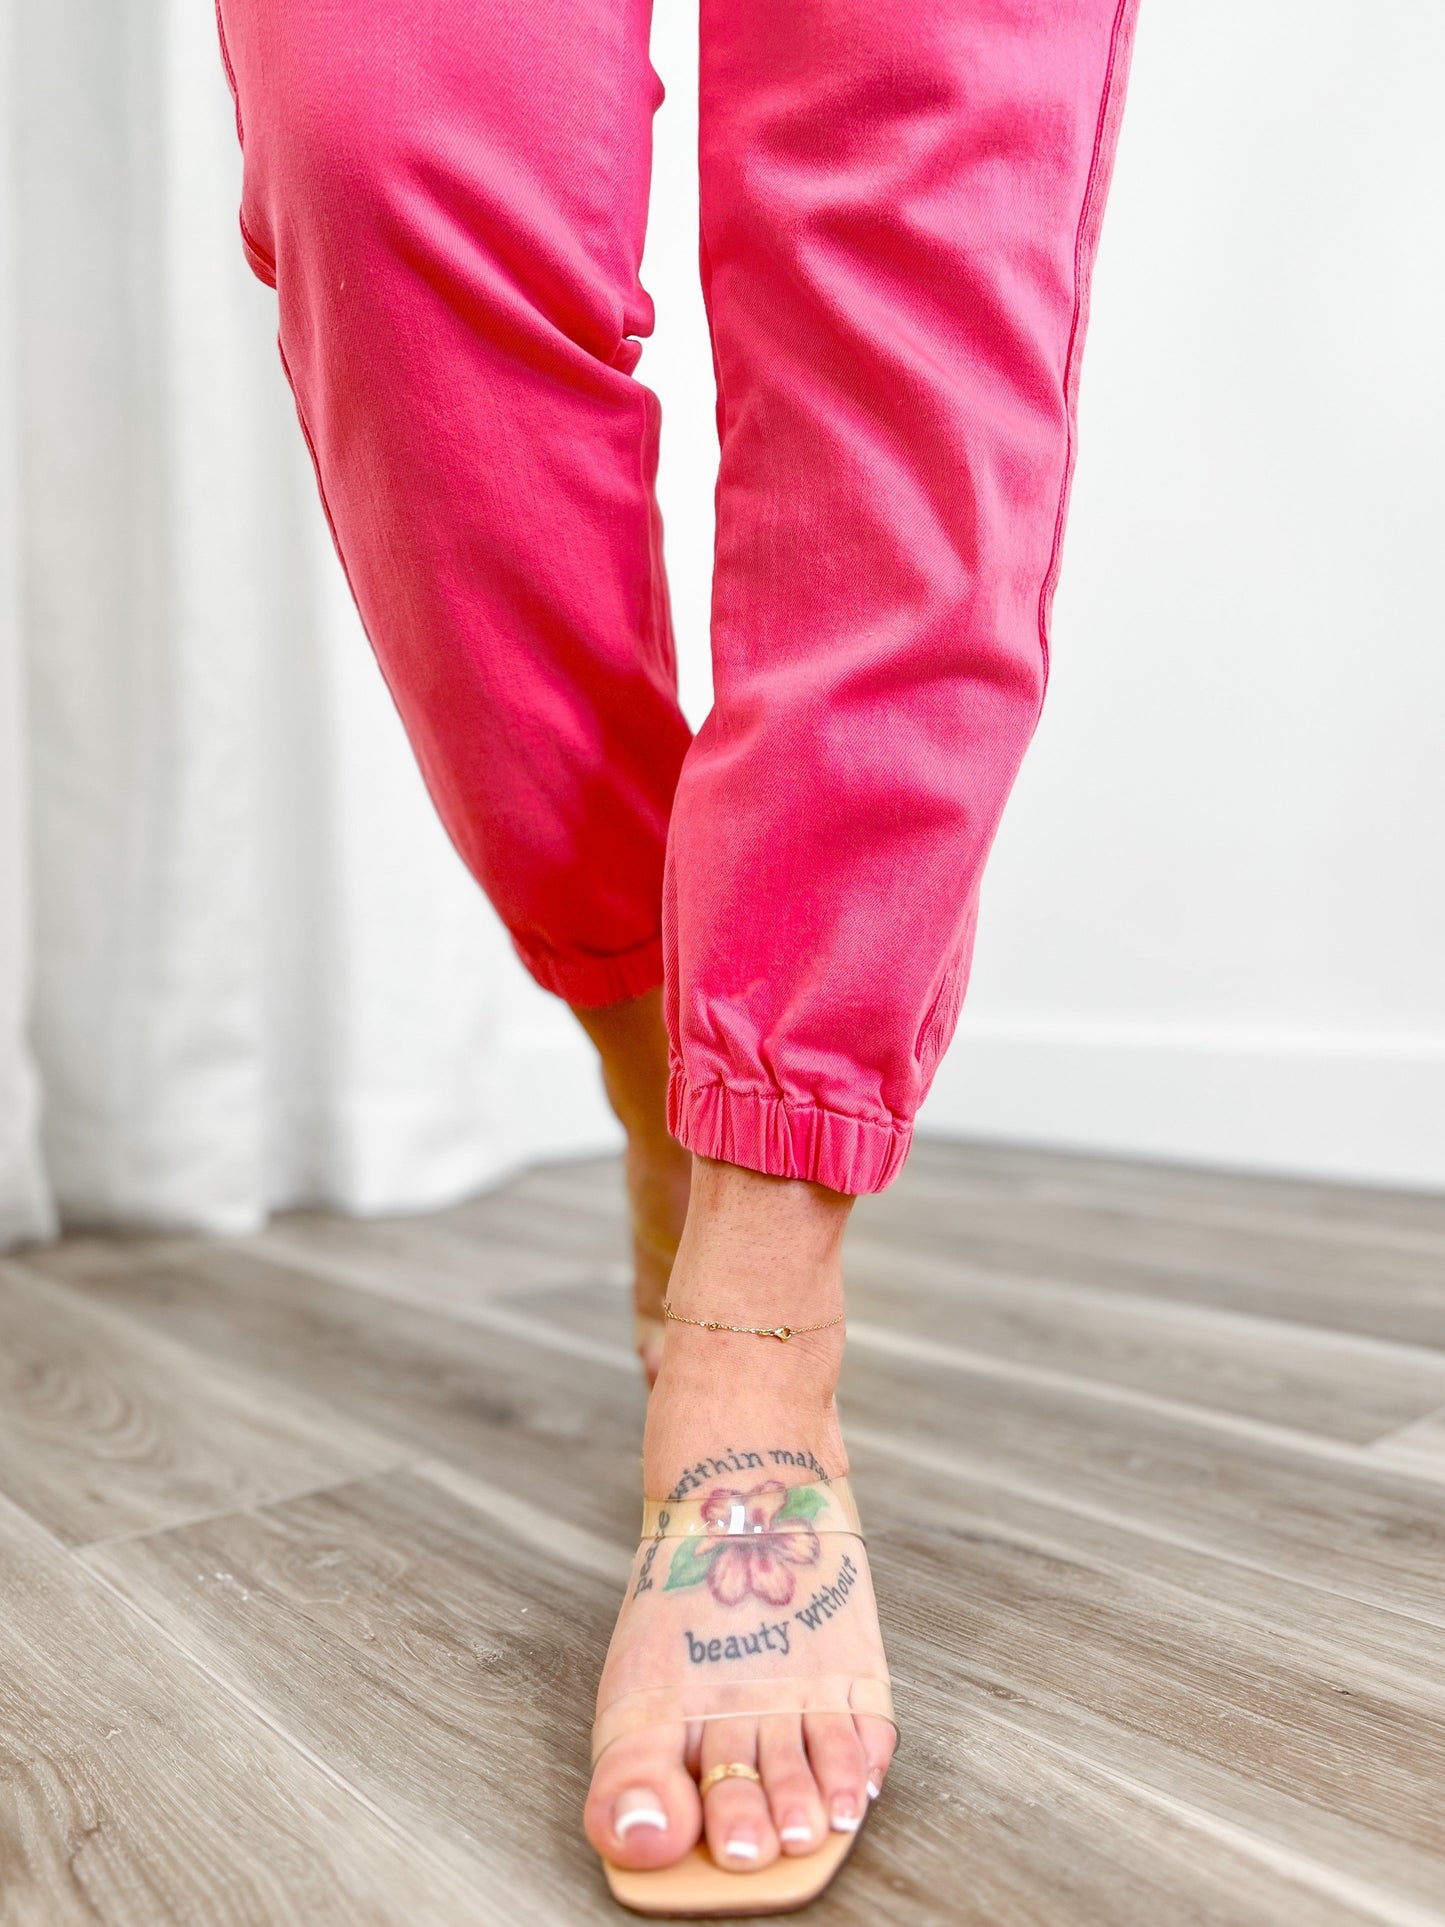 Risen Pink High Rise Jogger Jeans